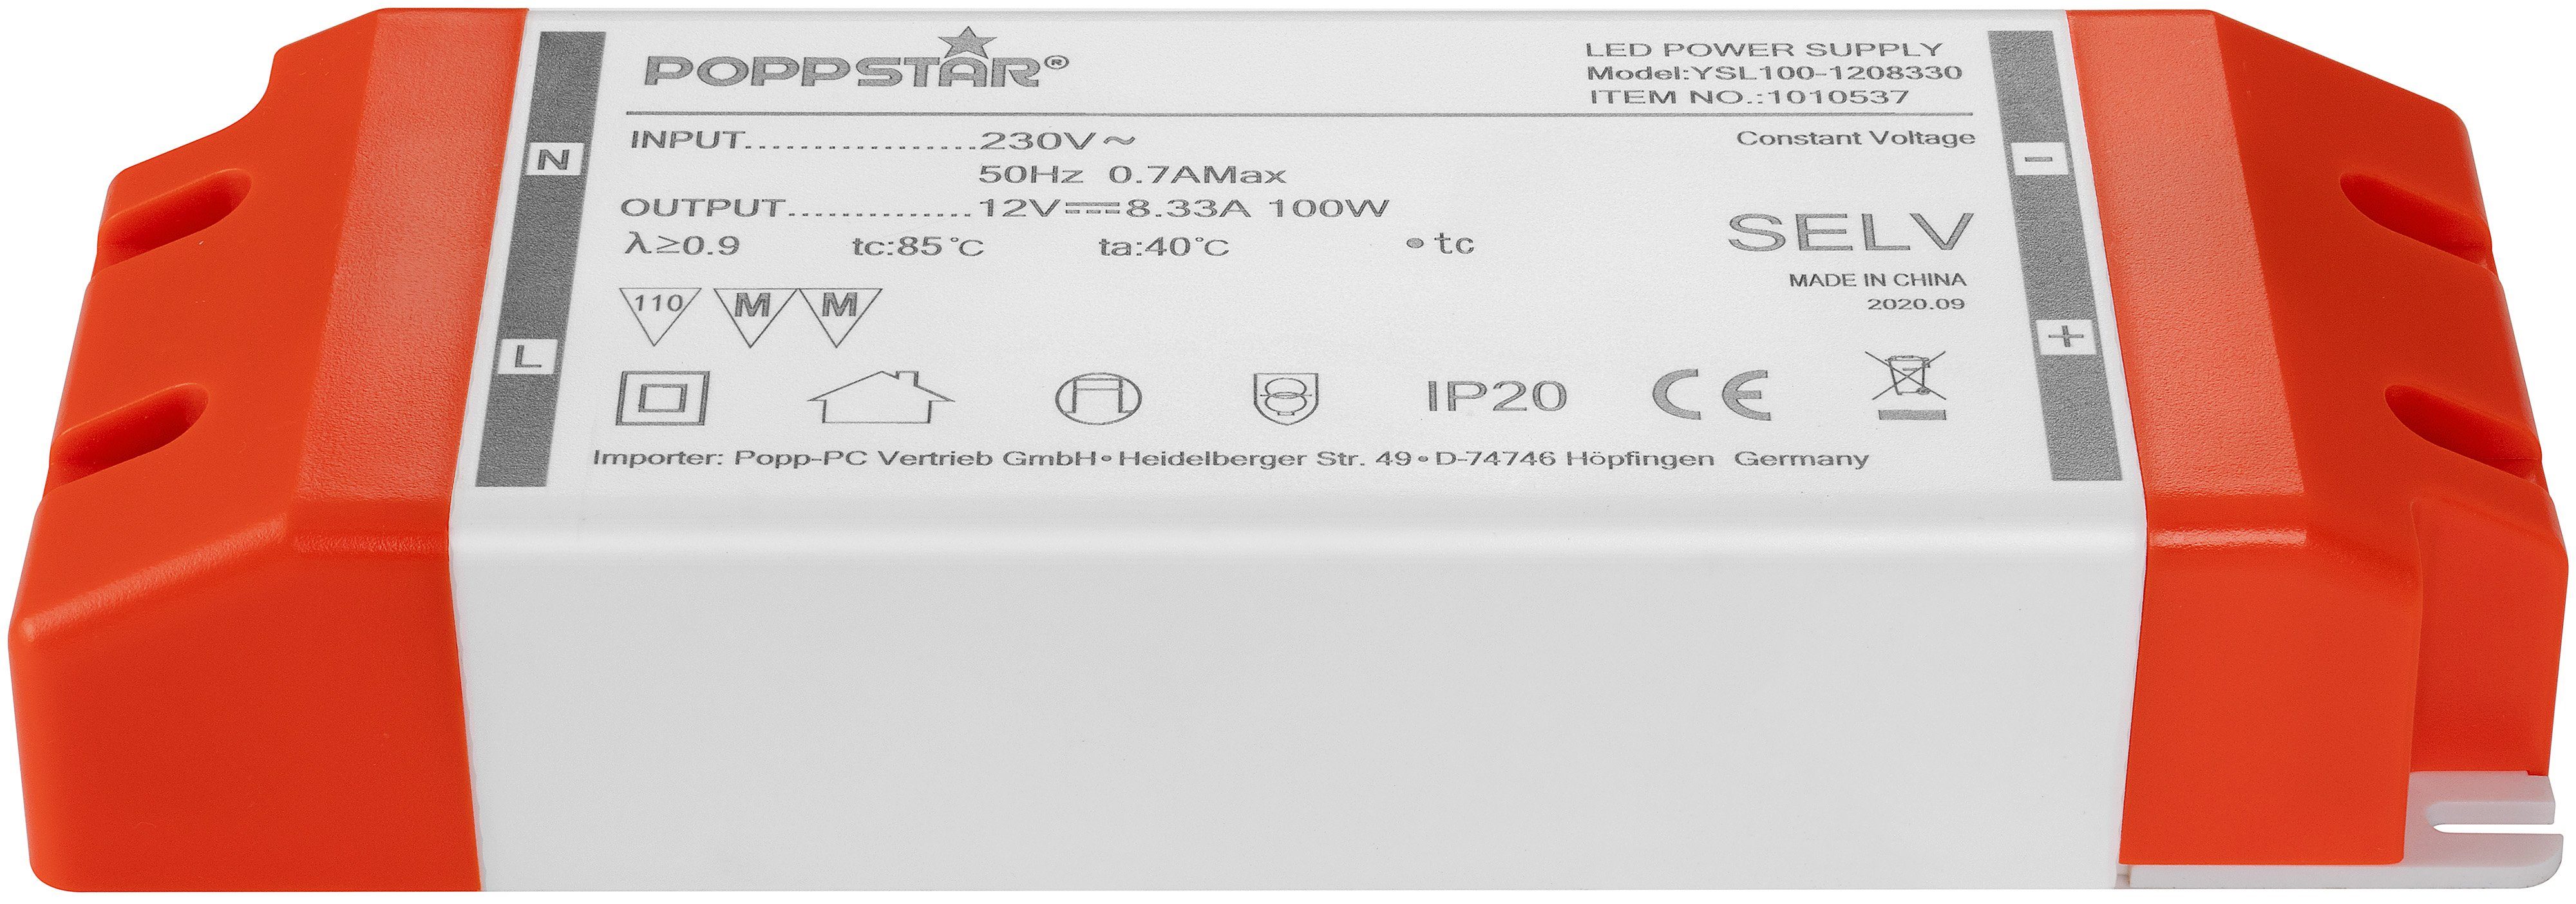 12V AC / LEDs) 8,33A Watt 1W Poppstar 100 Trafo Trafo LED bis 230V für Transformator DC LED (12V